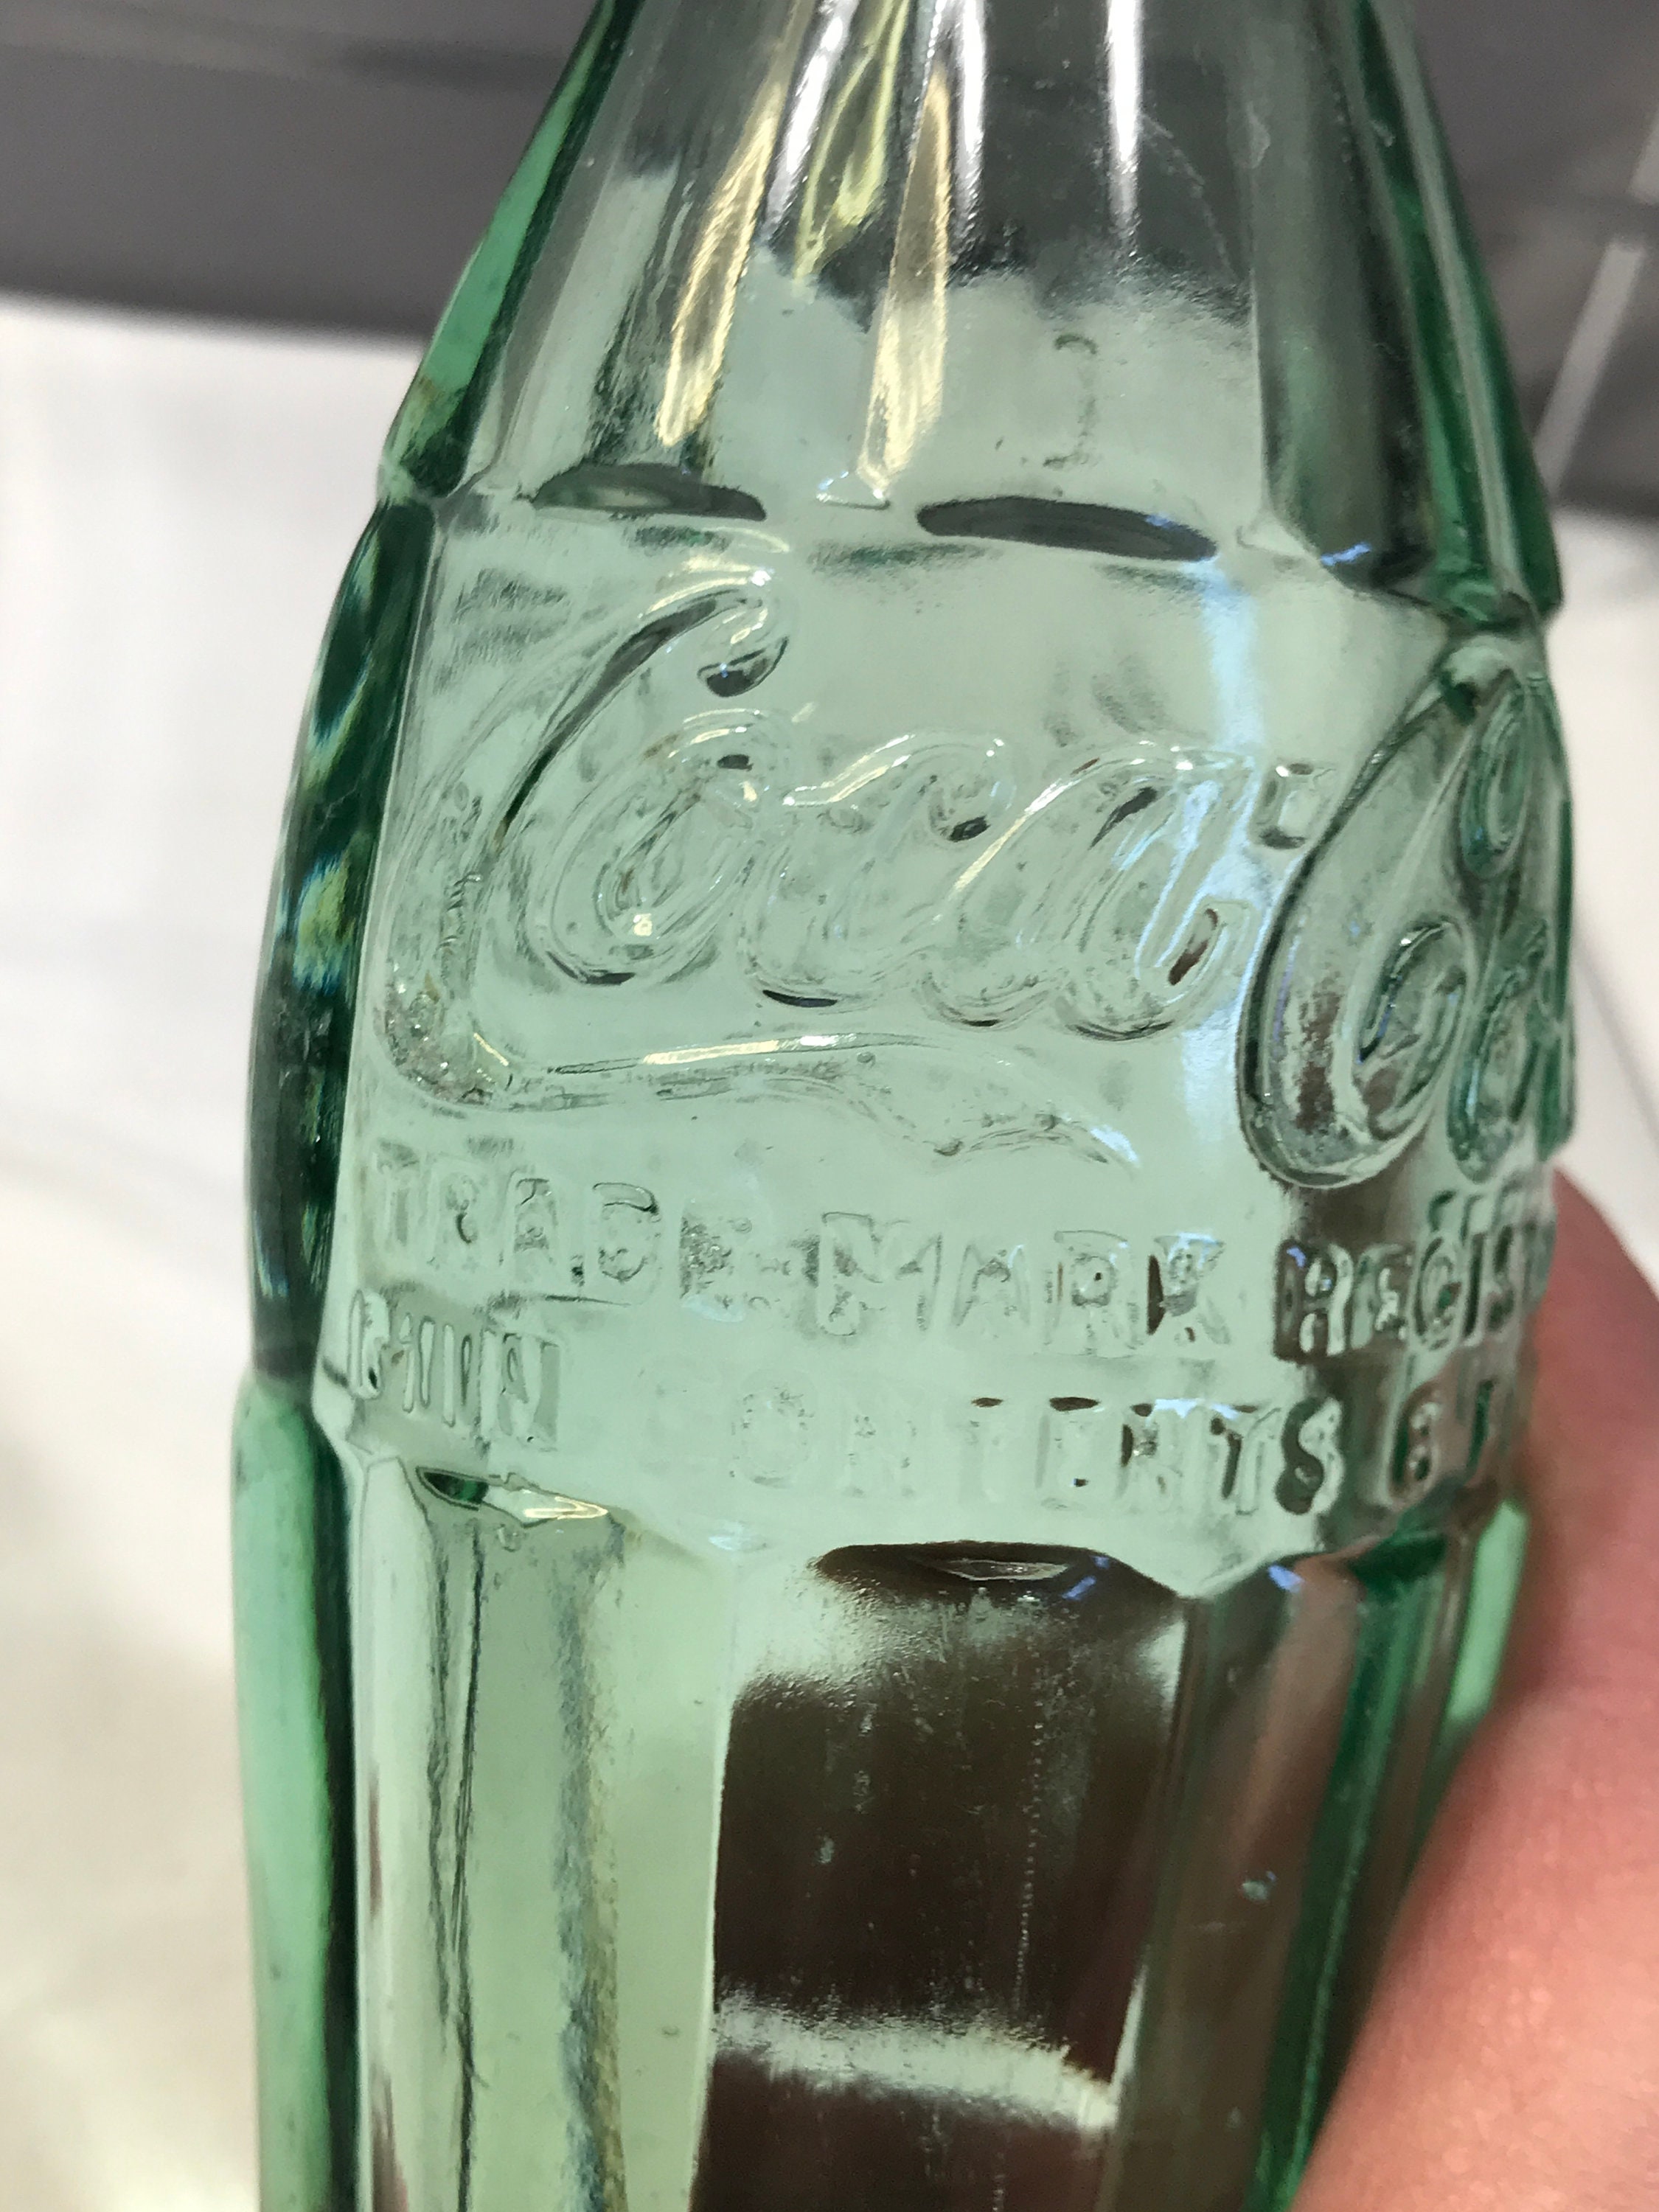 Coca-Cola retires classic glass bottle - CBS News